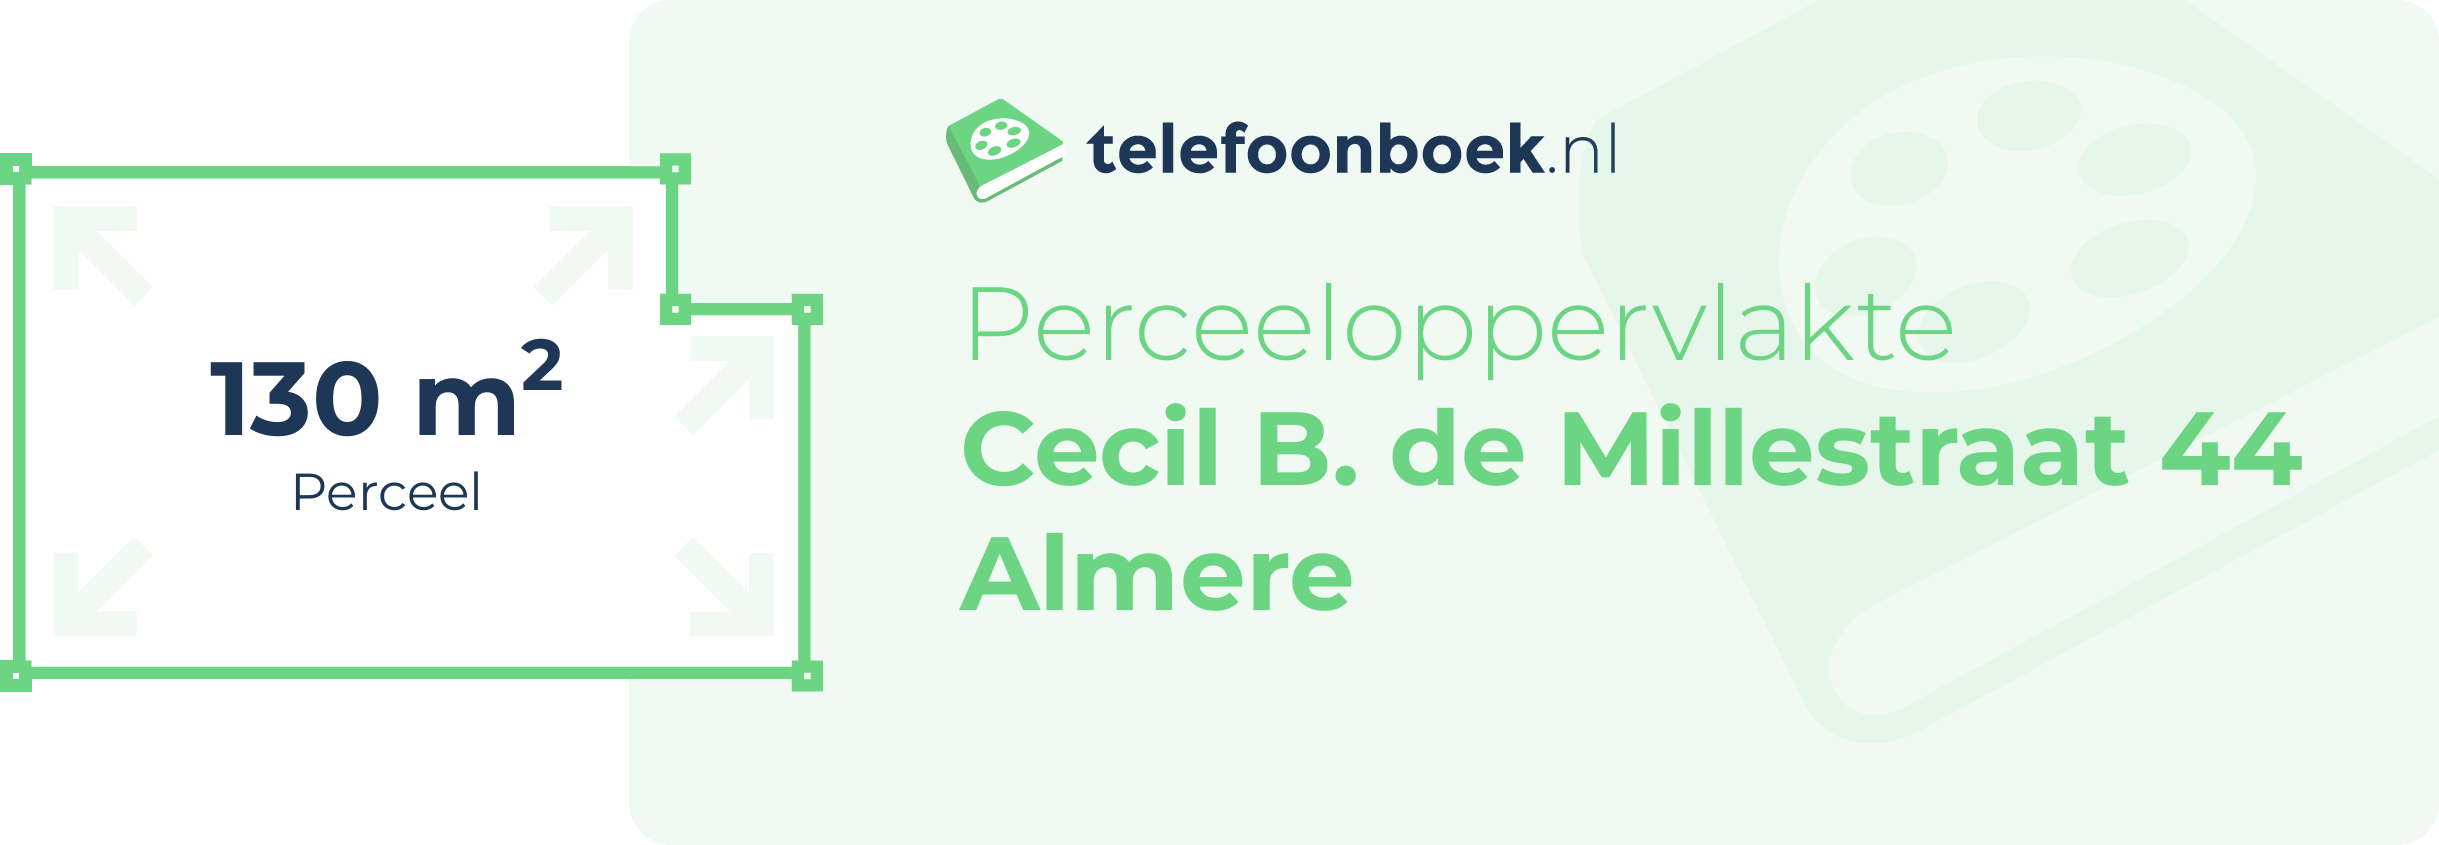 Perceeloppervlakte Cecil B. De Millestraat 44 Almere